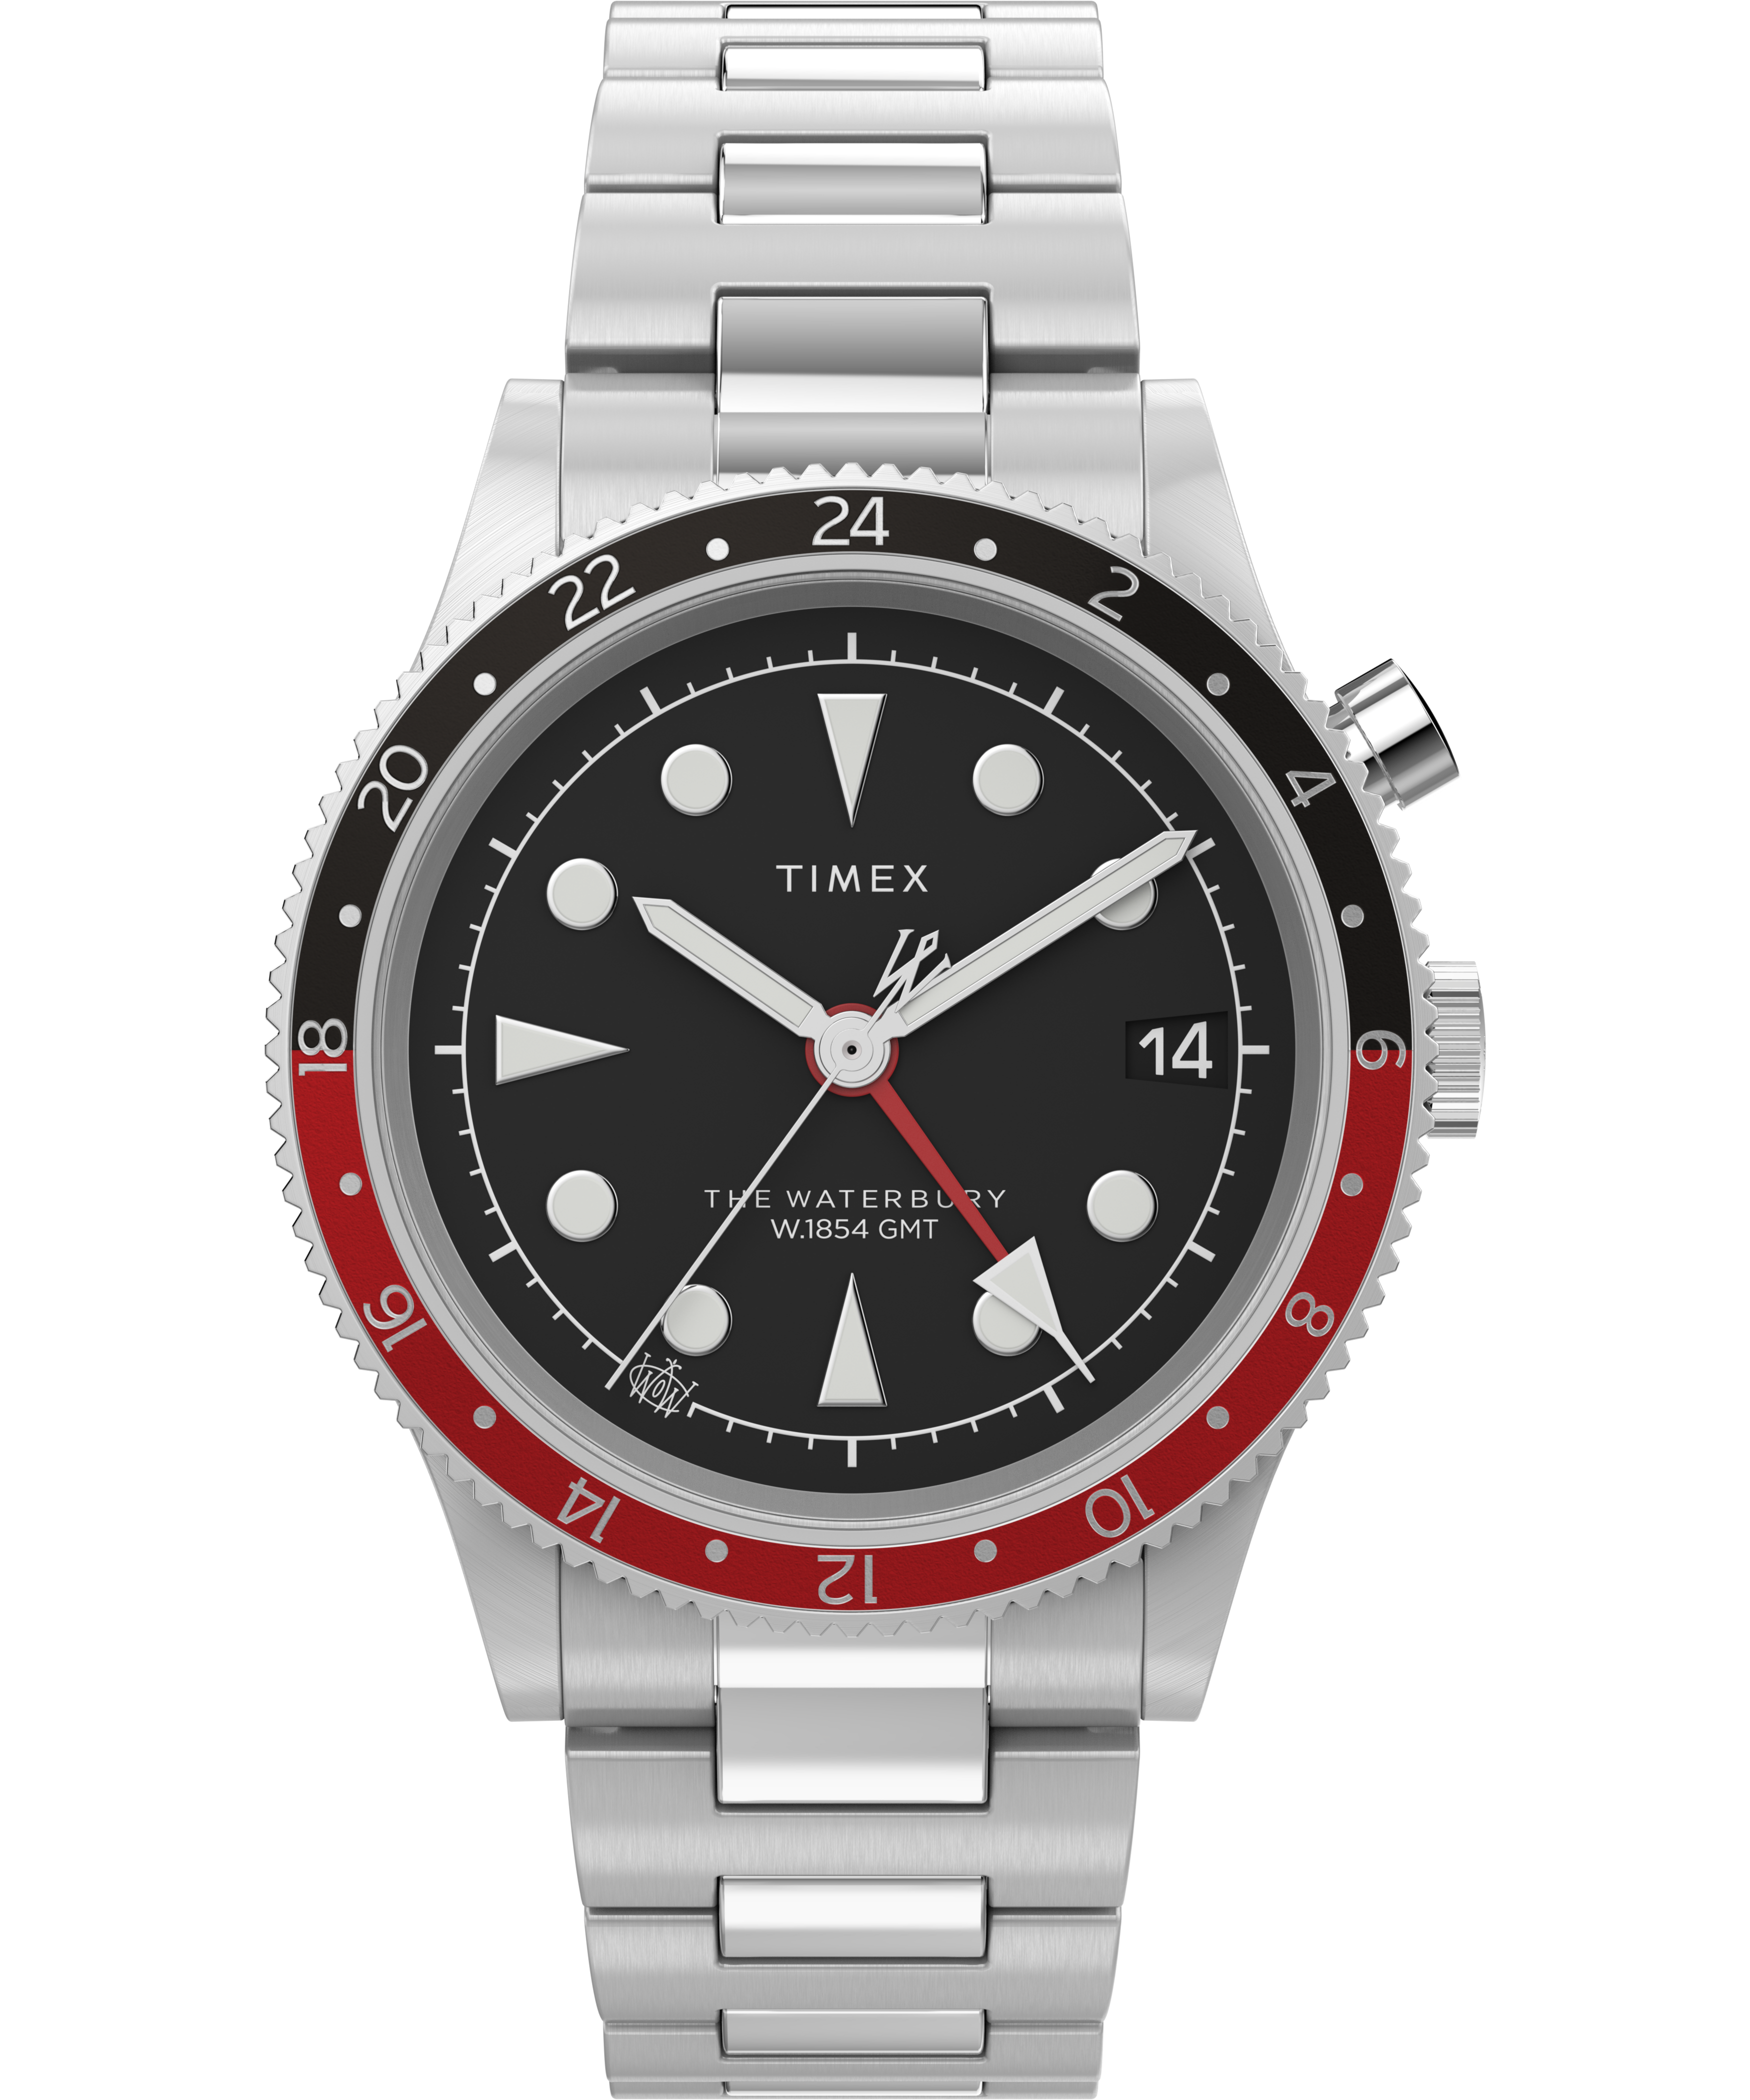 Helix Stainless Steel Bracelet Watch Tw043Hg05